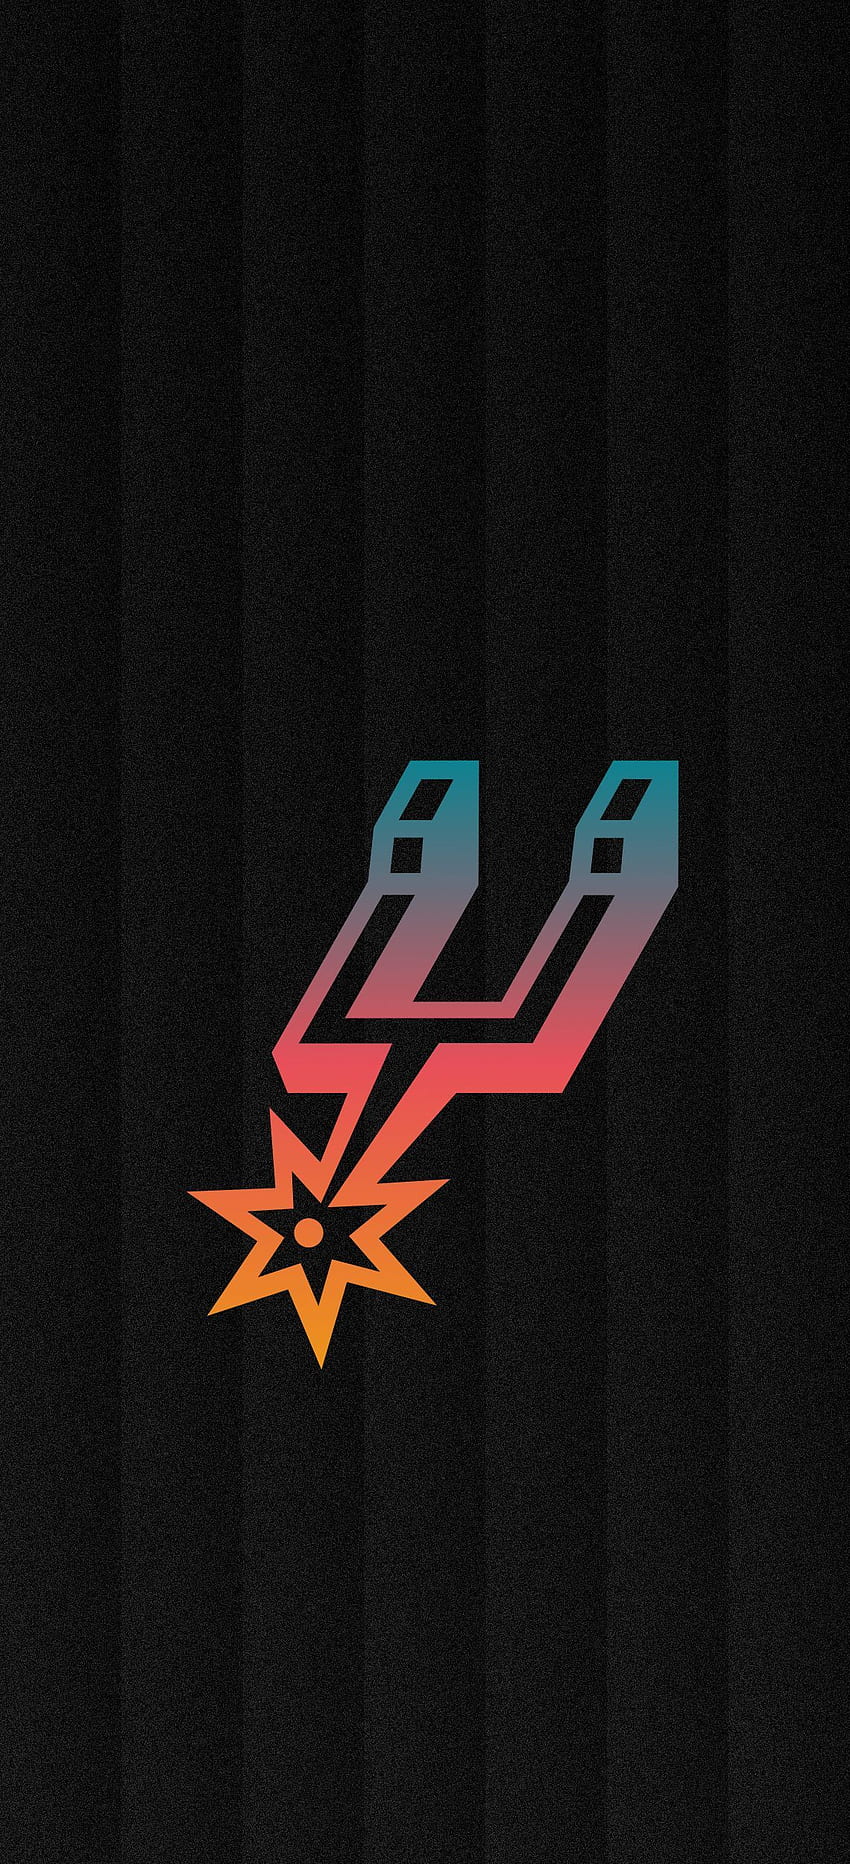 Gradien San Antonio Spurs . Bola basket San antonio spurs, logo San antonio spurs, logo Spurs wallpaper ponsel HD